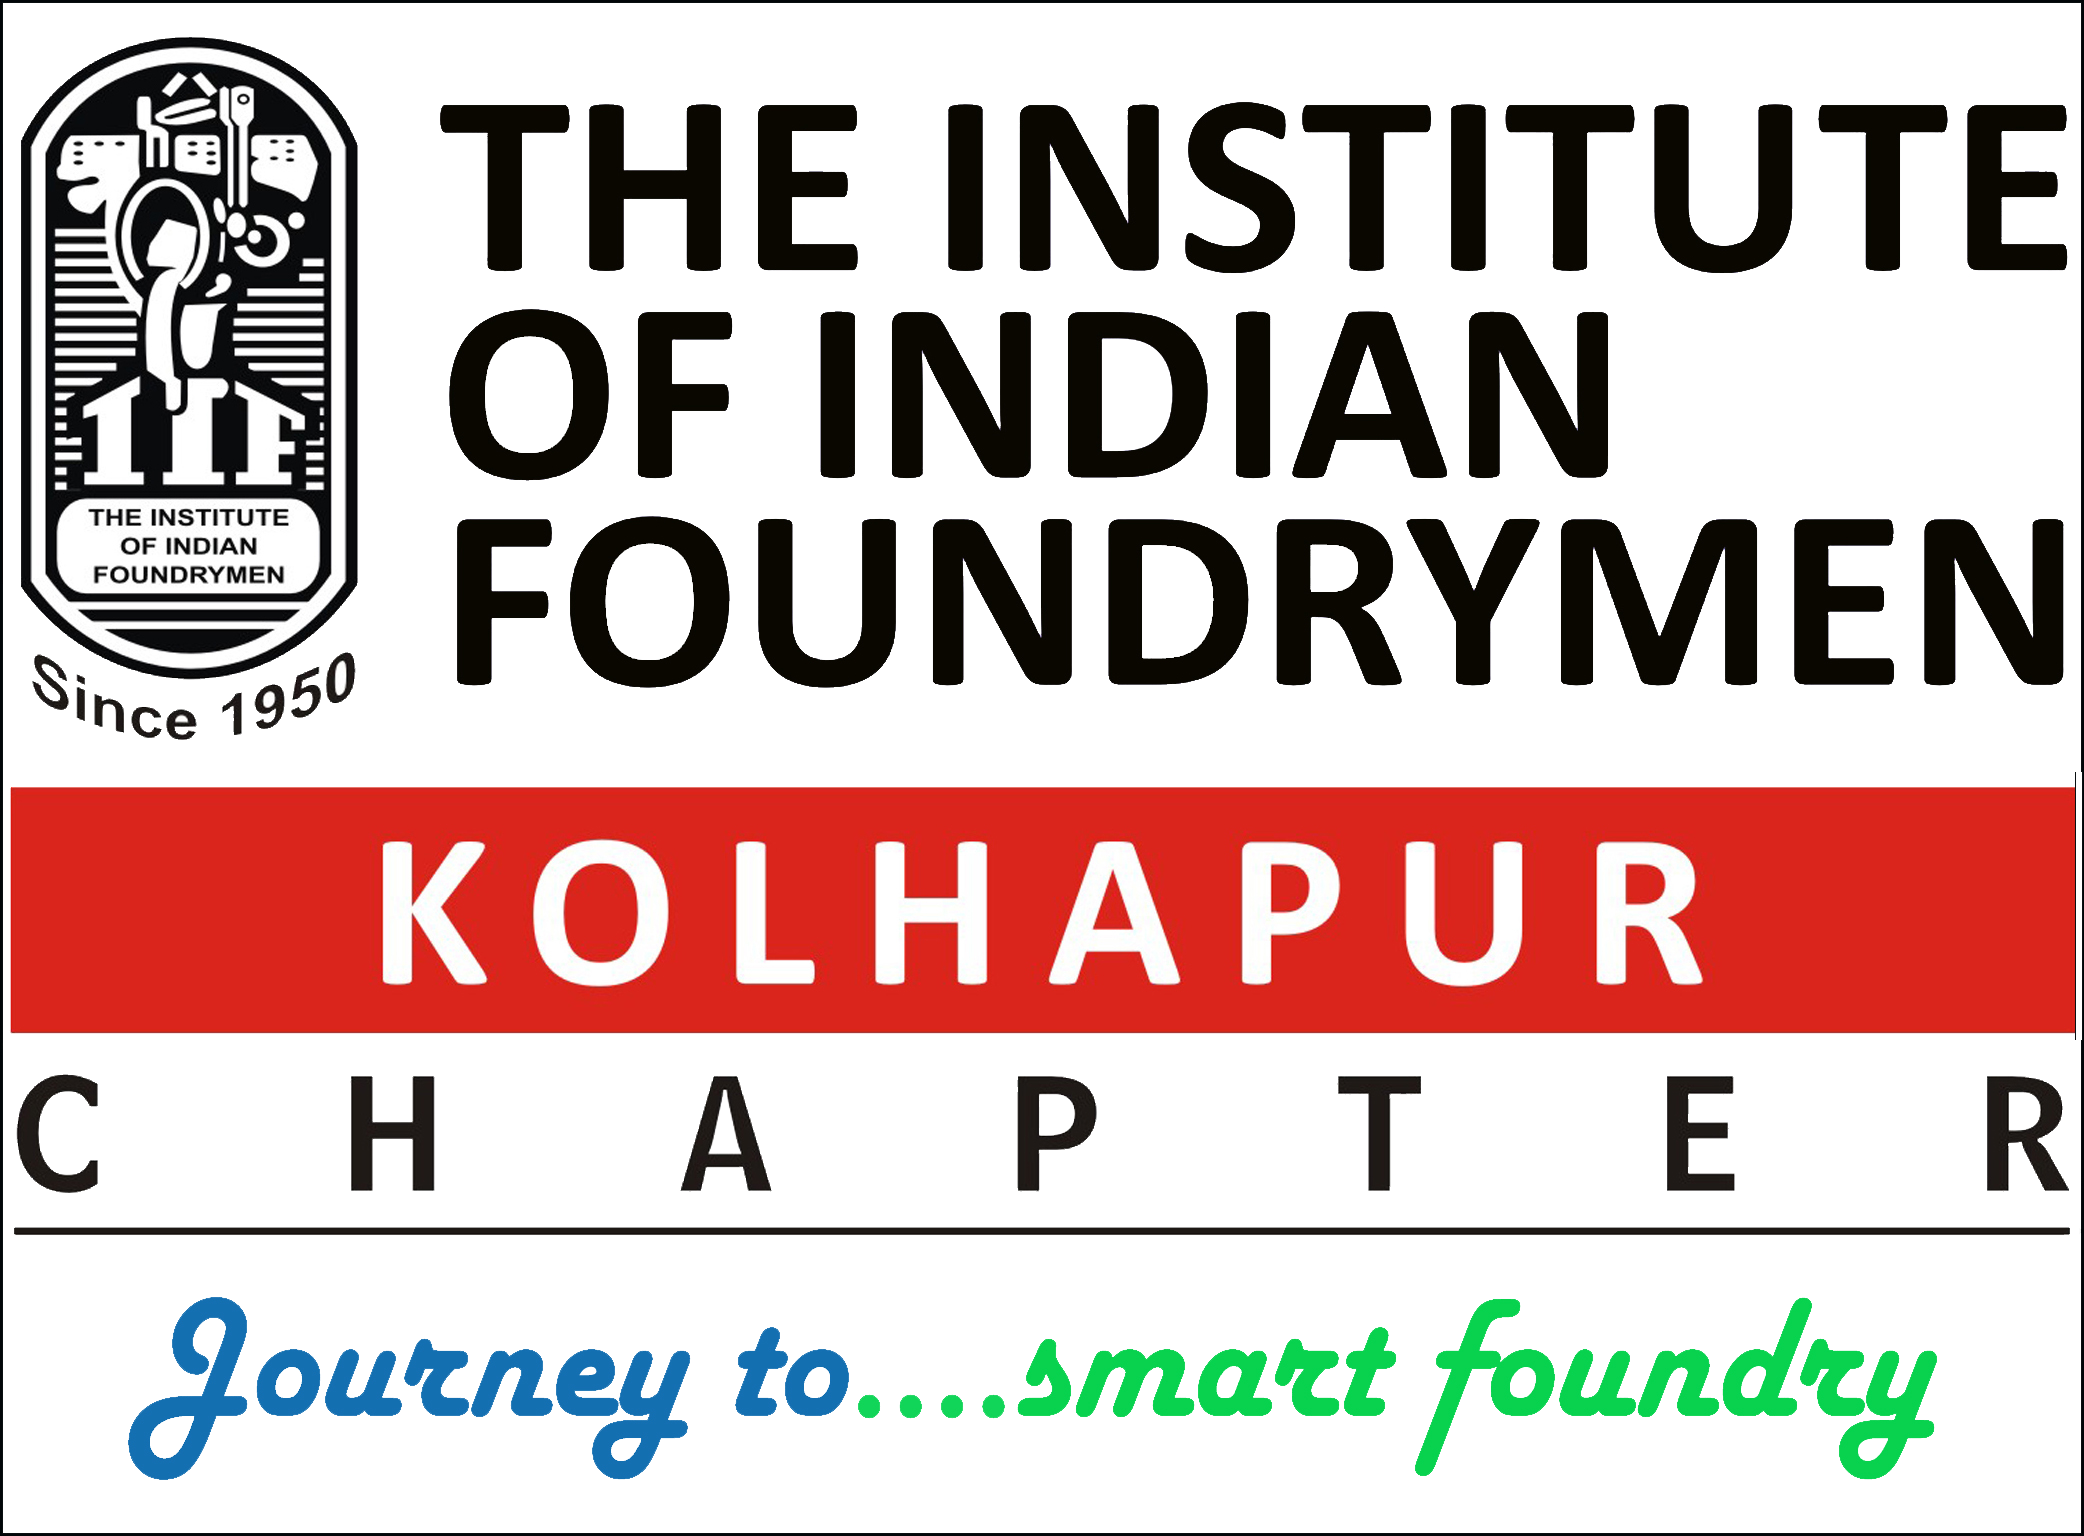 THE INSTITUTE OF INDIAN FOUNDRYMEN, KOHLAPUR